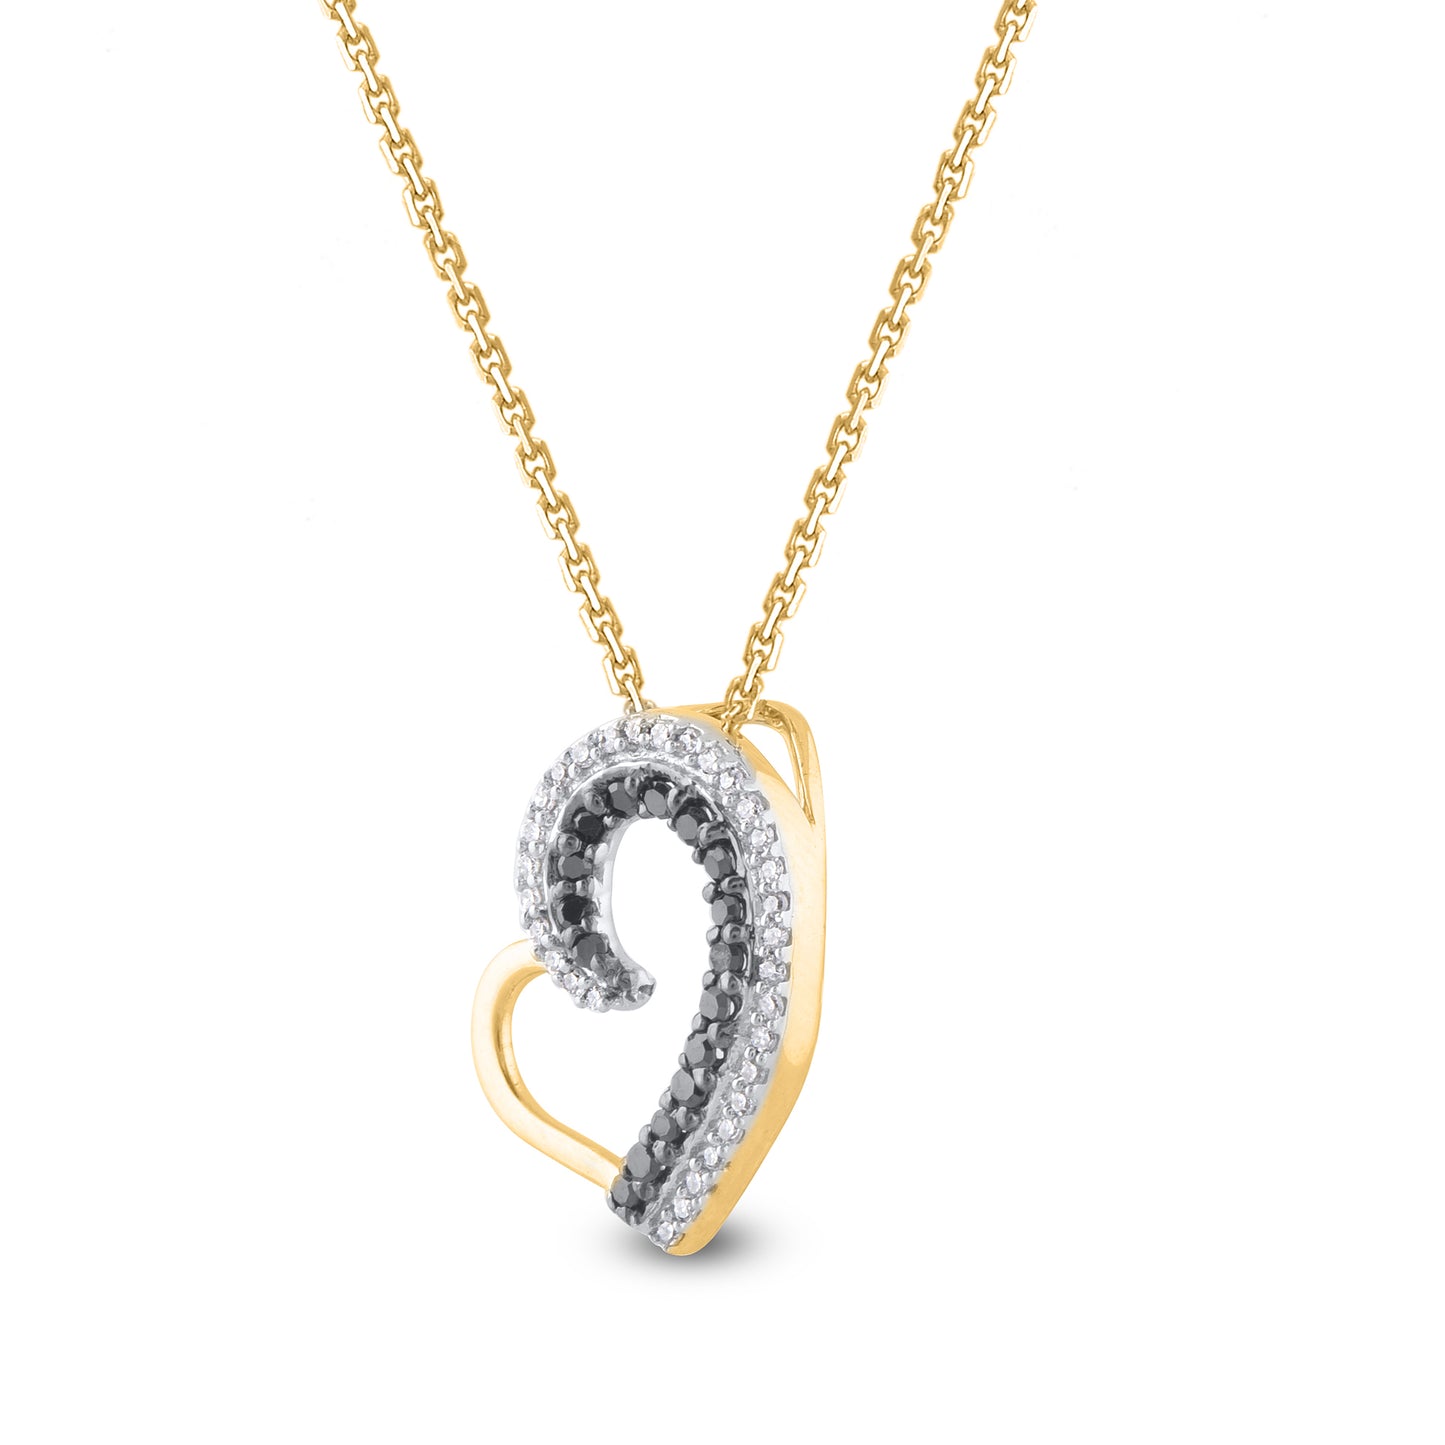 Treated Black Diamond Love Heart Pendant Necklace in 10K Gold